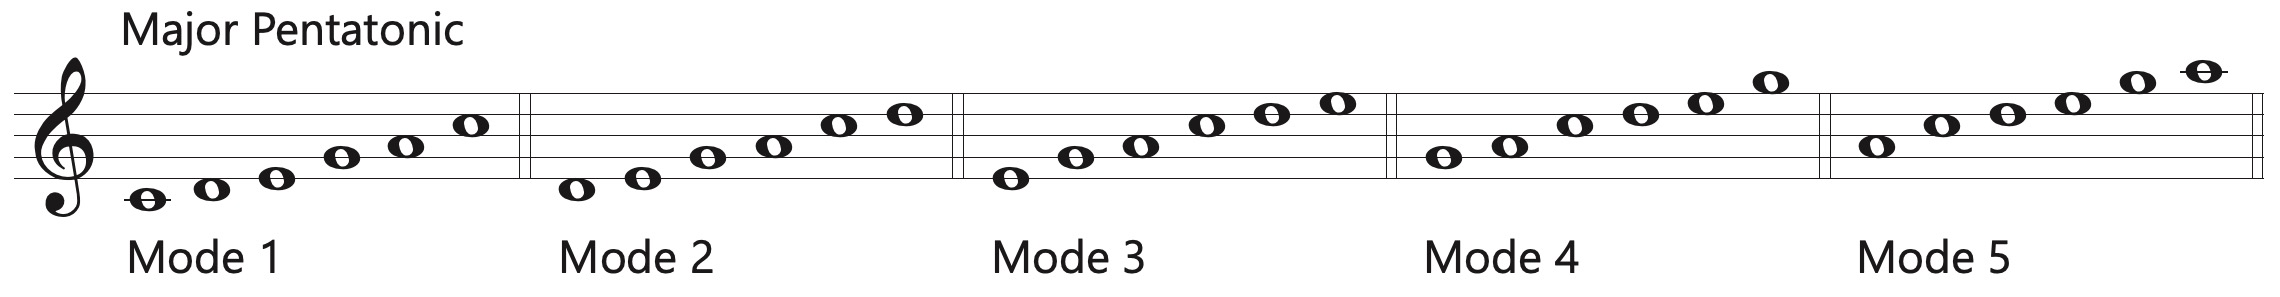 major mode pentatonic scales